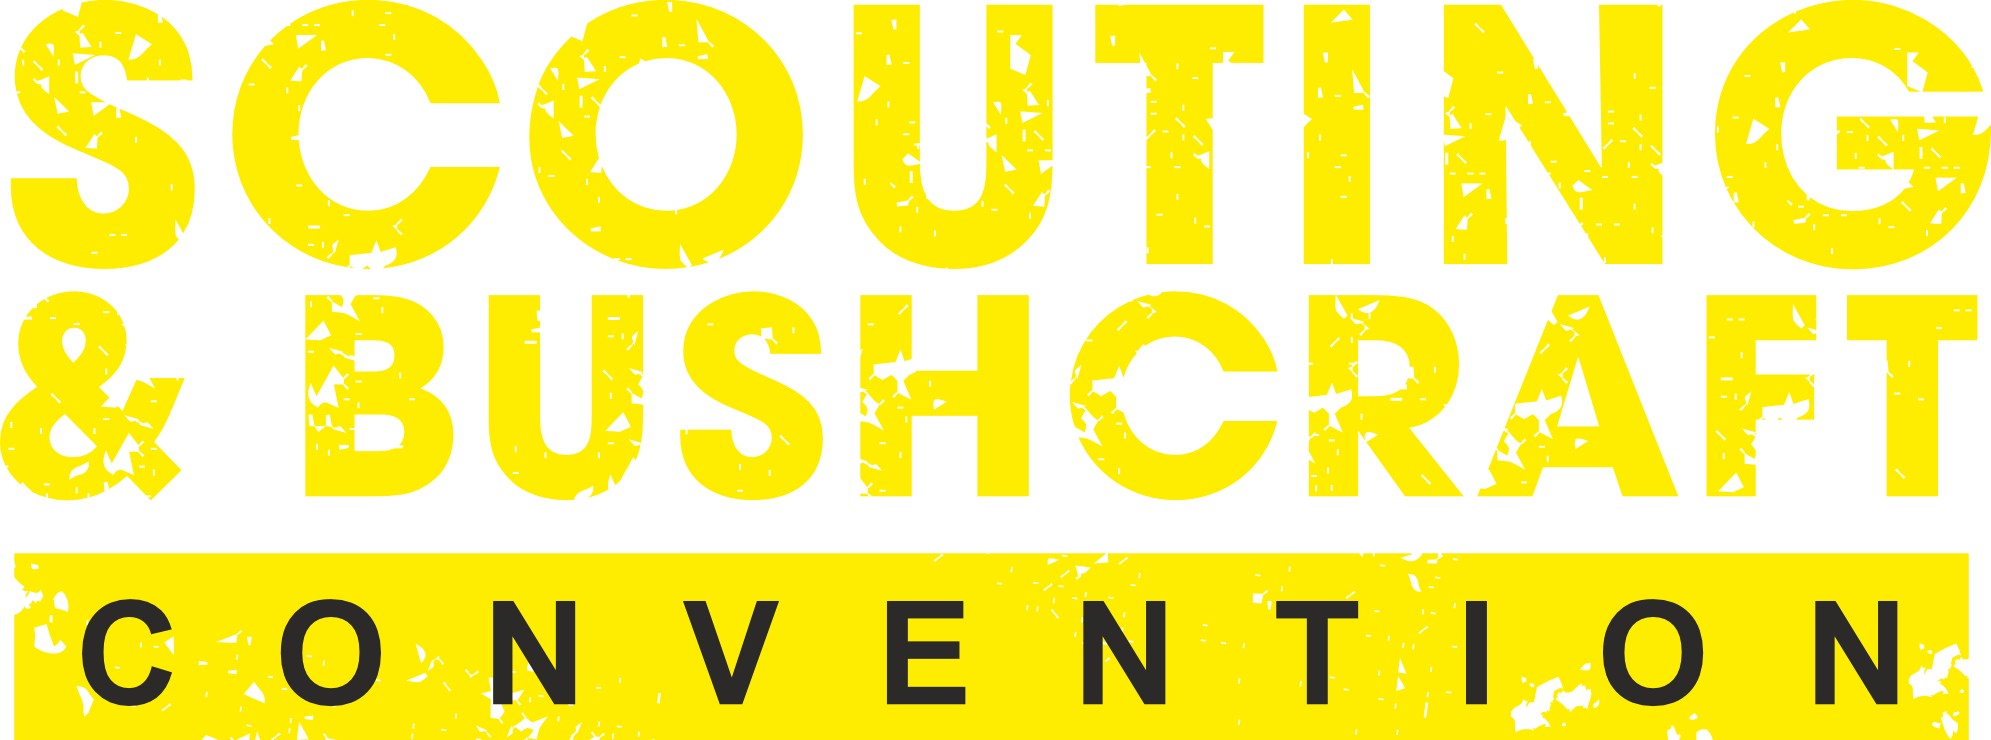 (c) Scoutingbushcraftconvention.org